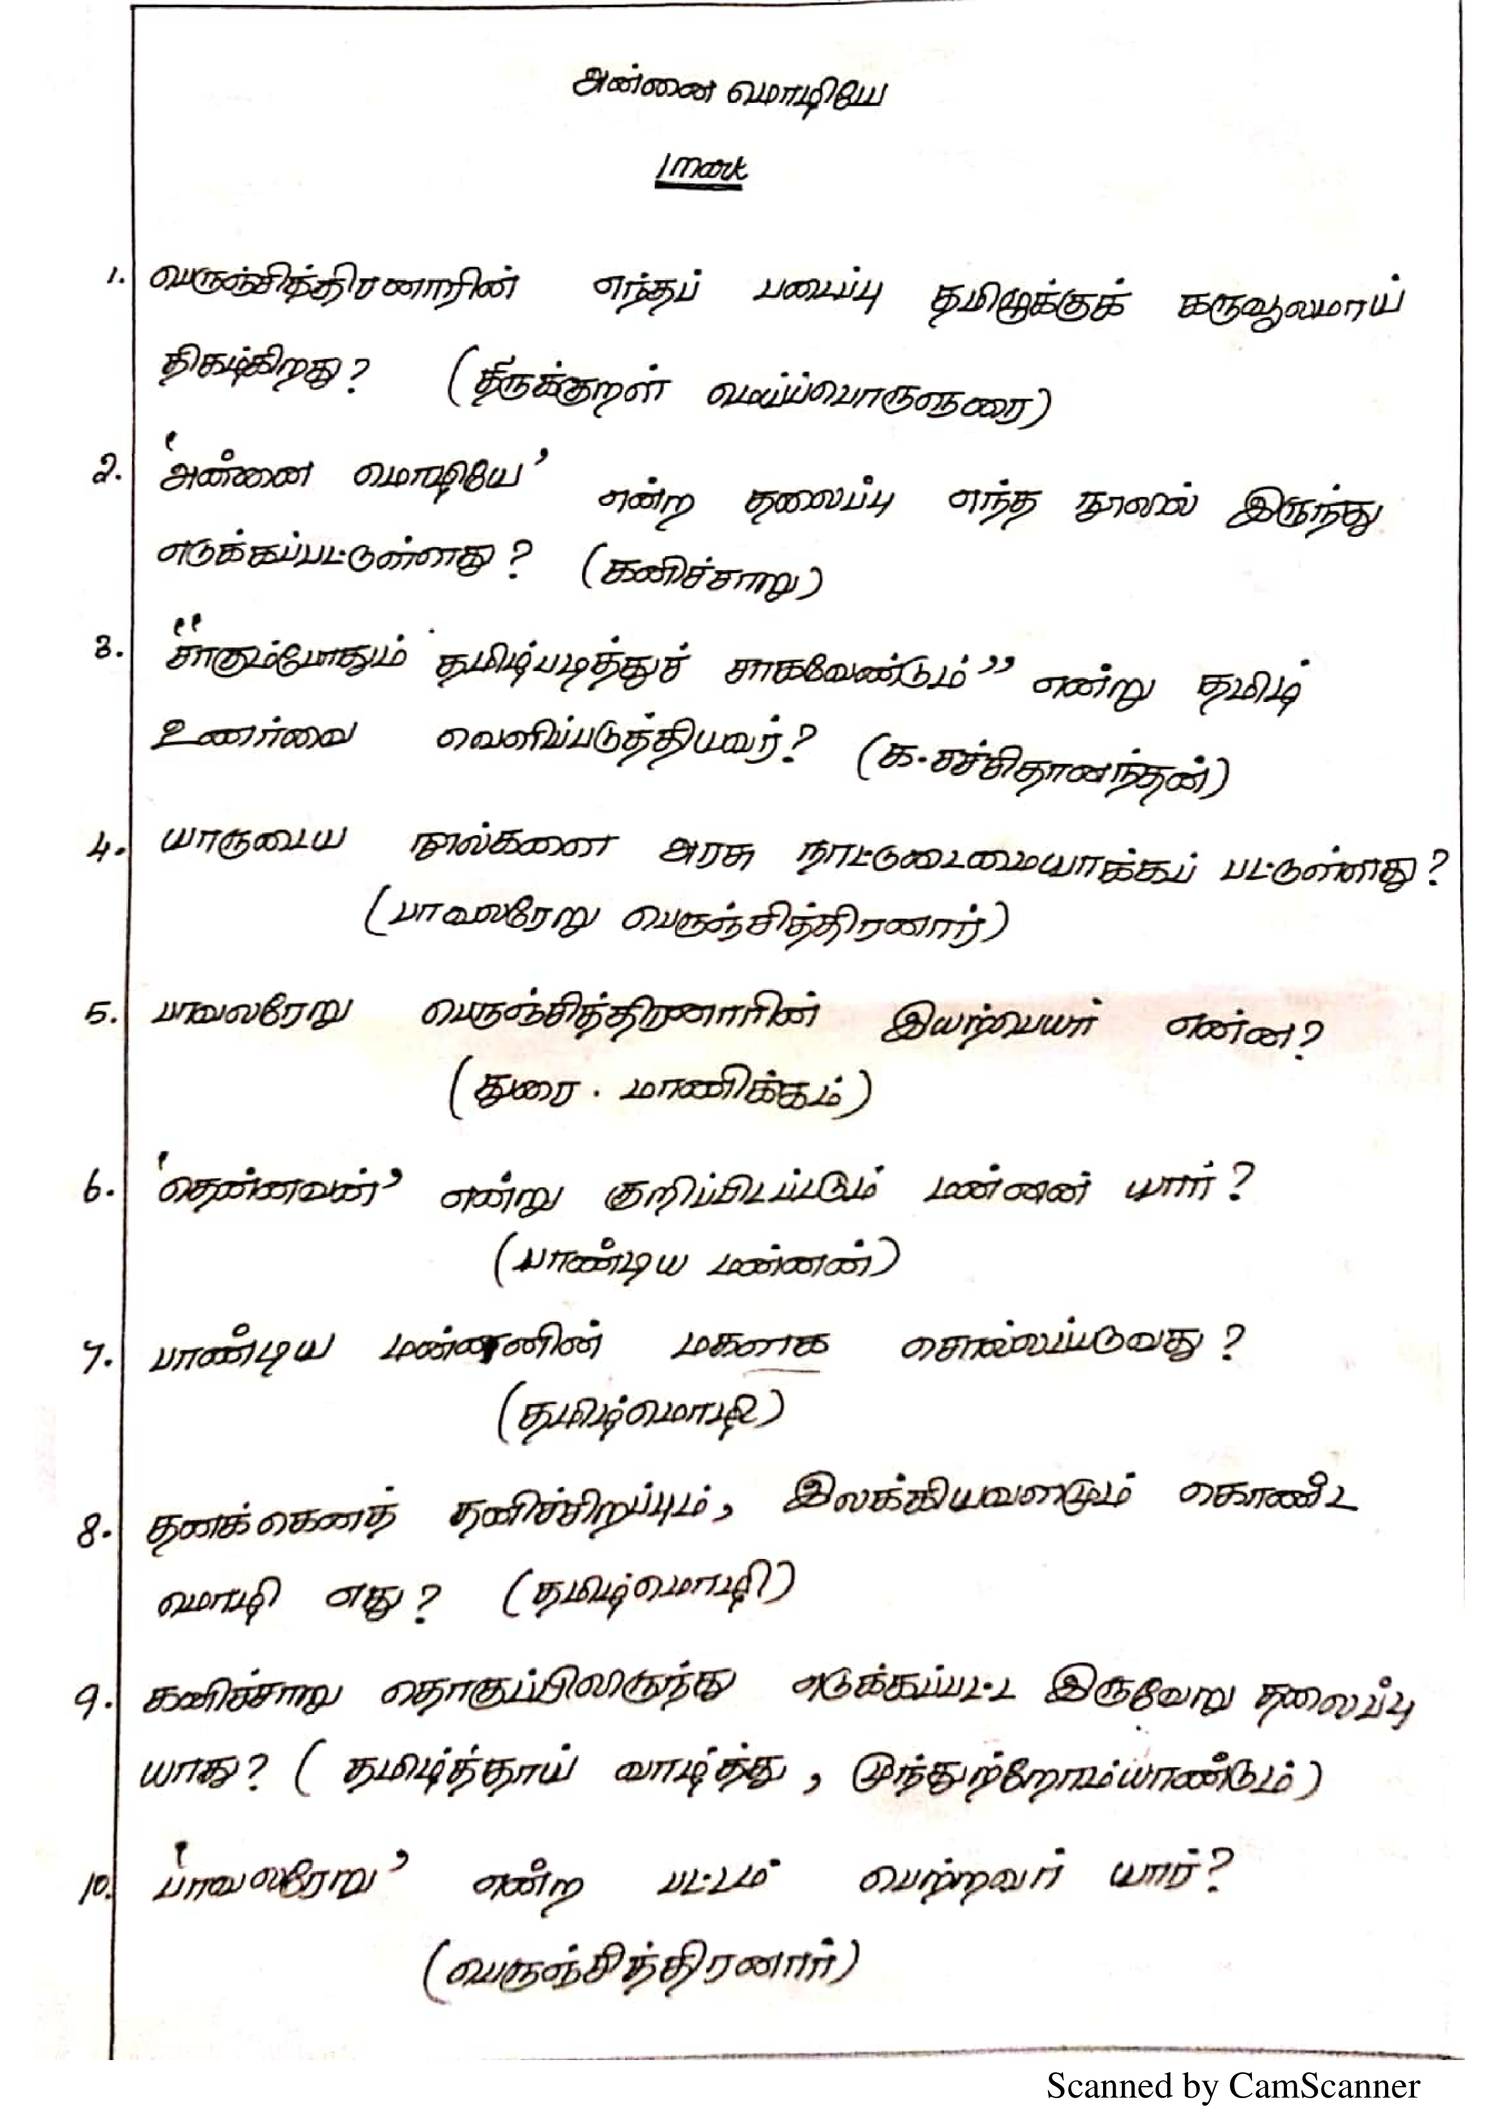 case study format in tamil pdf